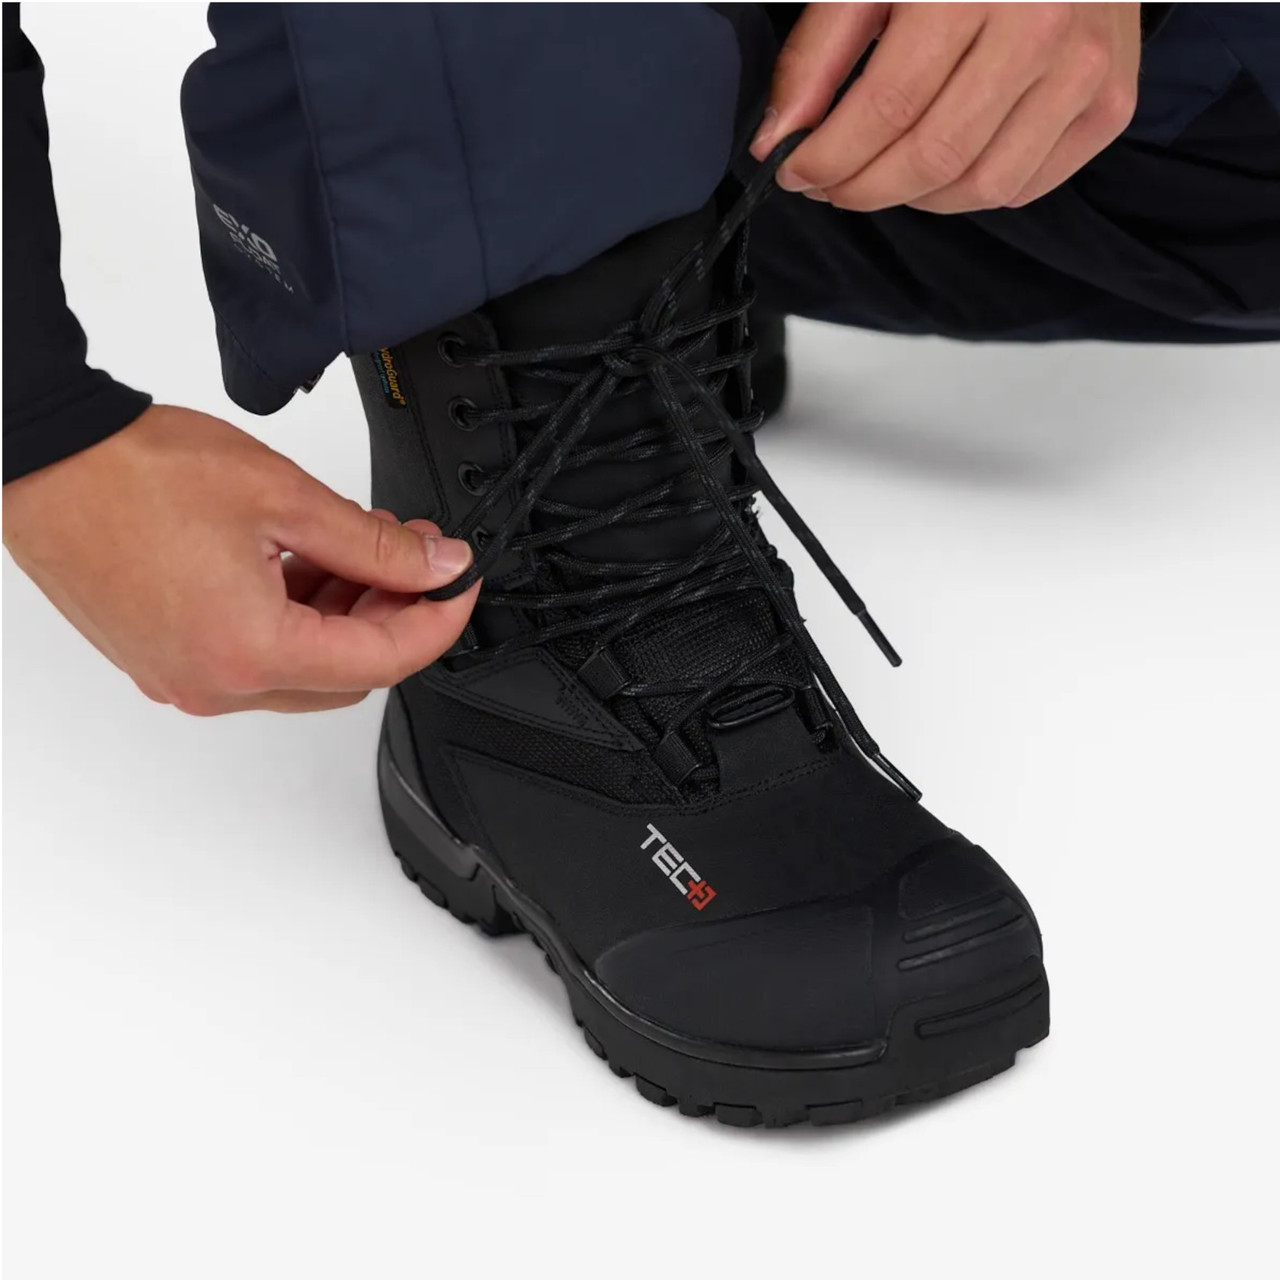 Ski-Doo New OEM, Waterproof Abrasion Resistant Tec+ Boots, Men's 11, Black, 4442533190